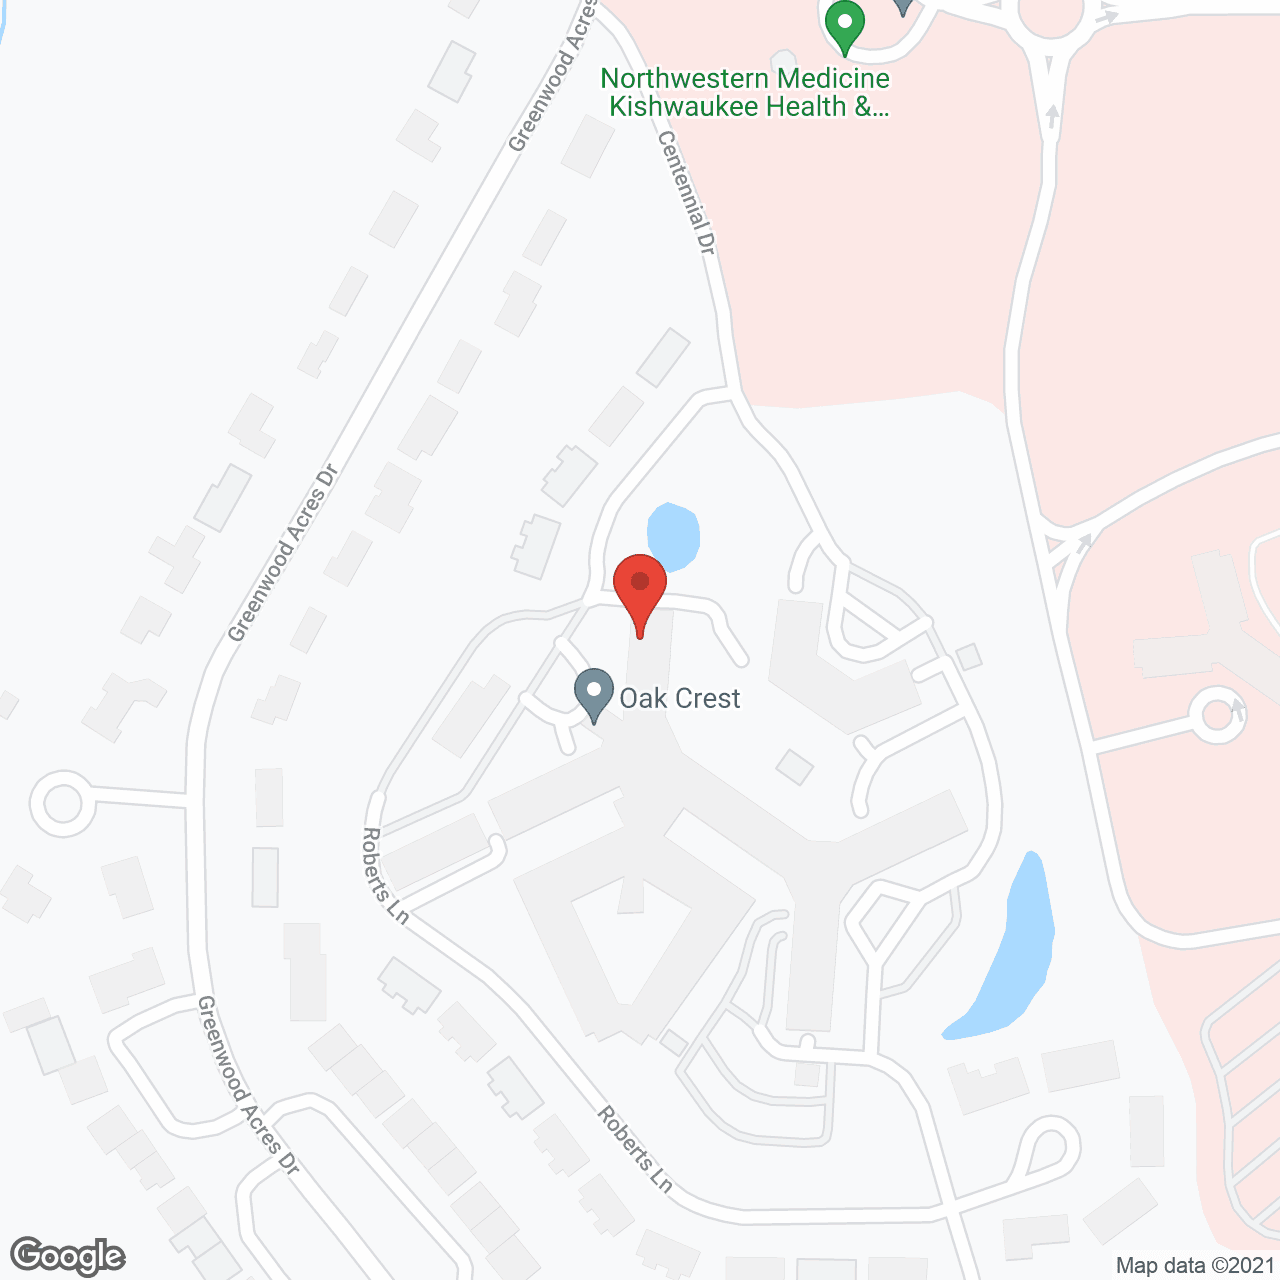 Oak Crest in google map